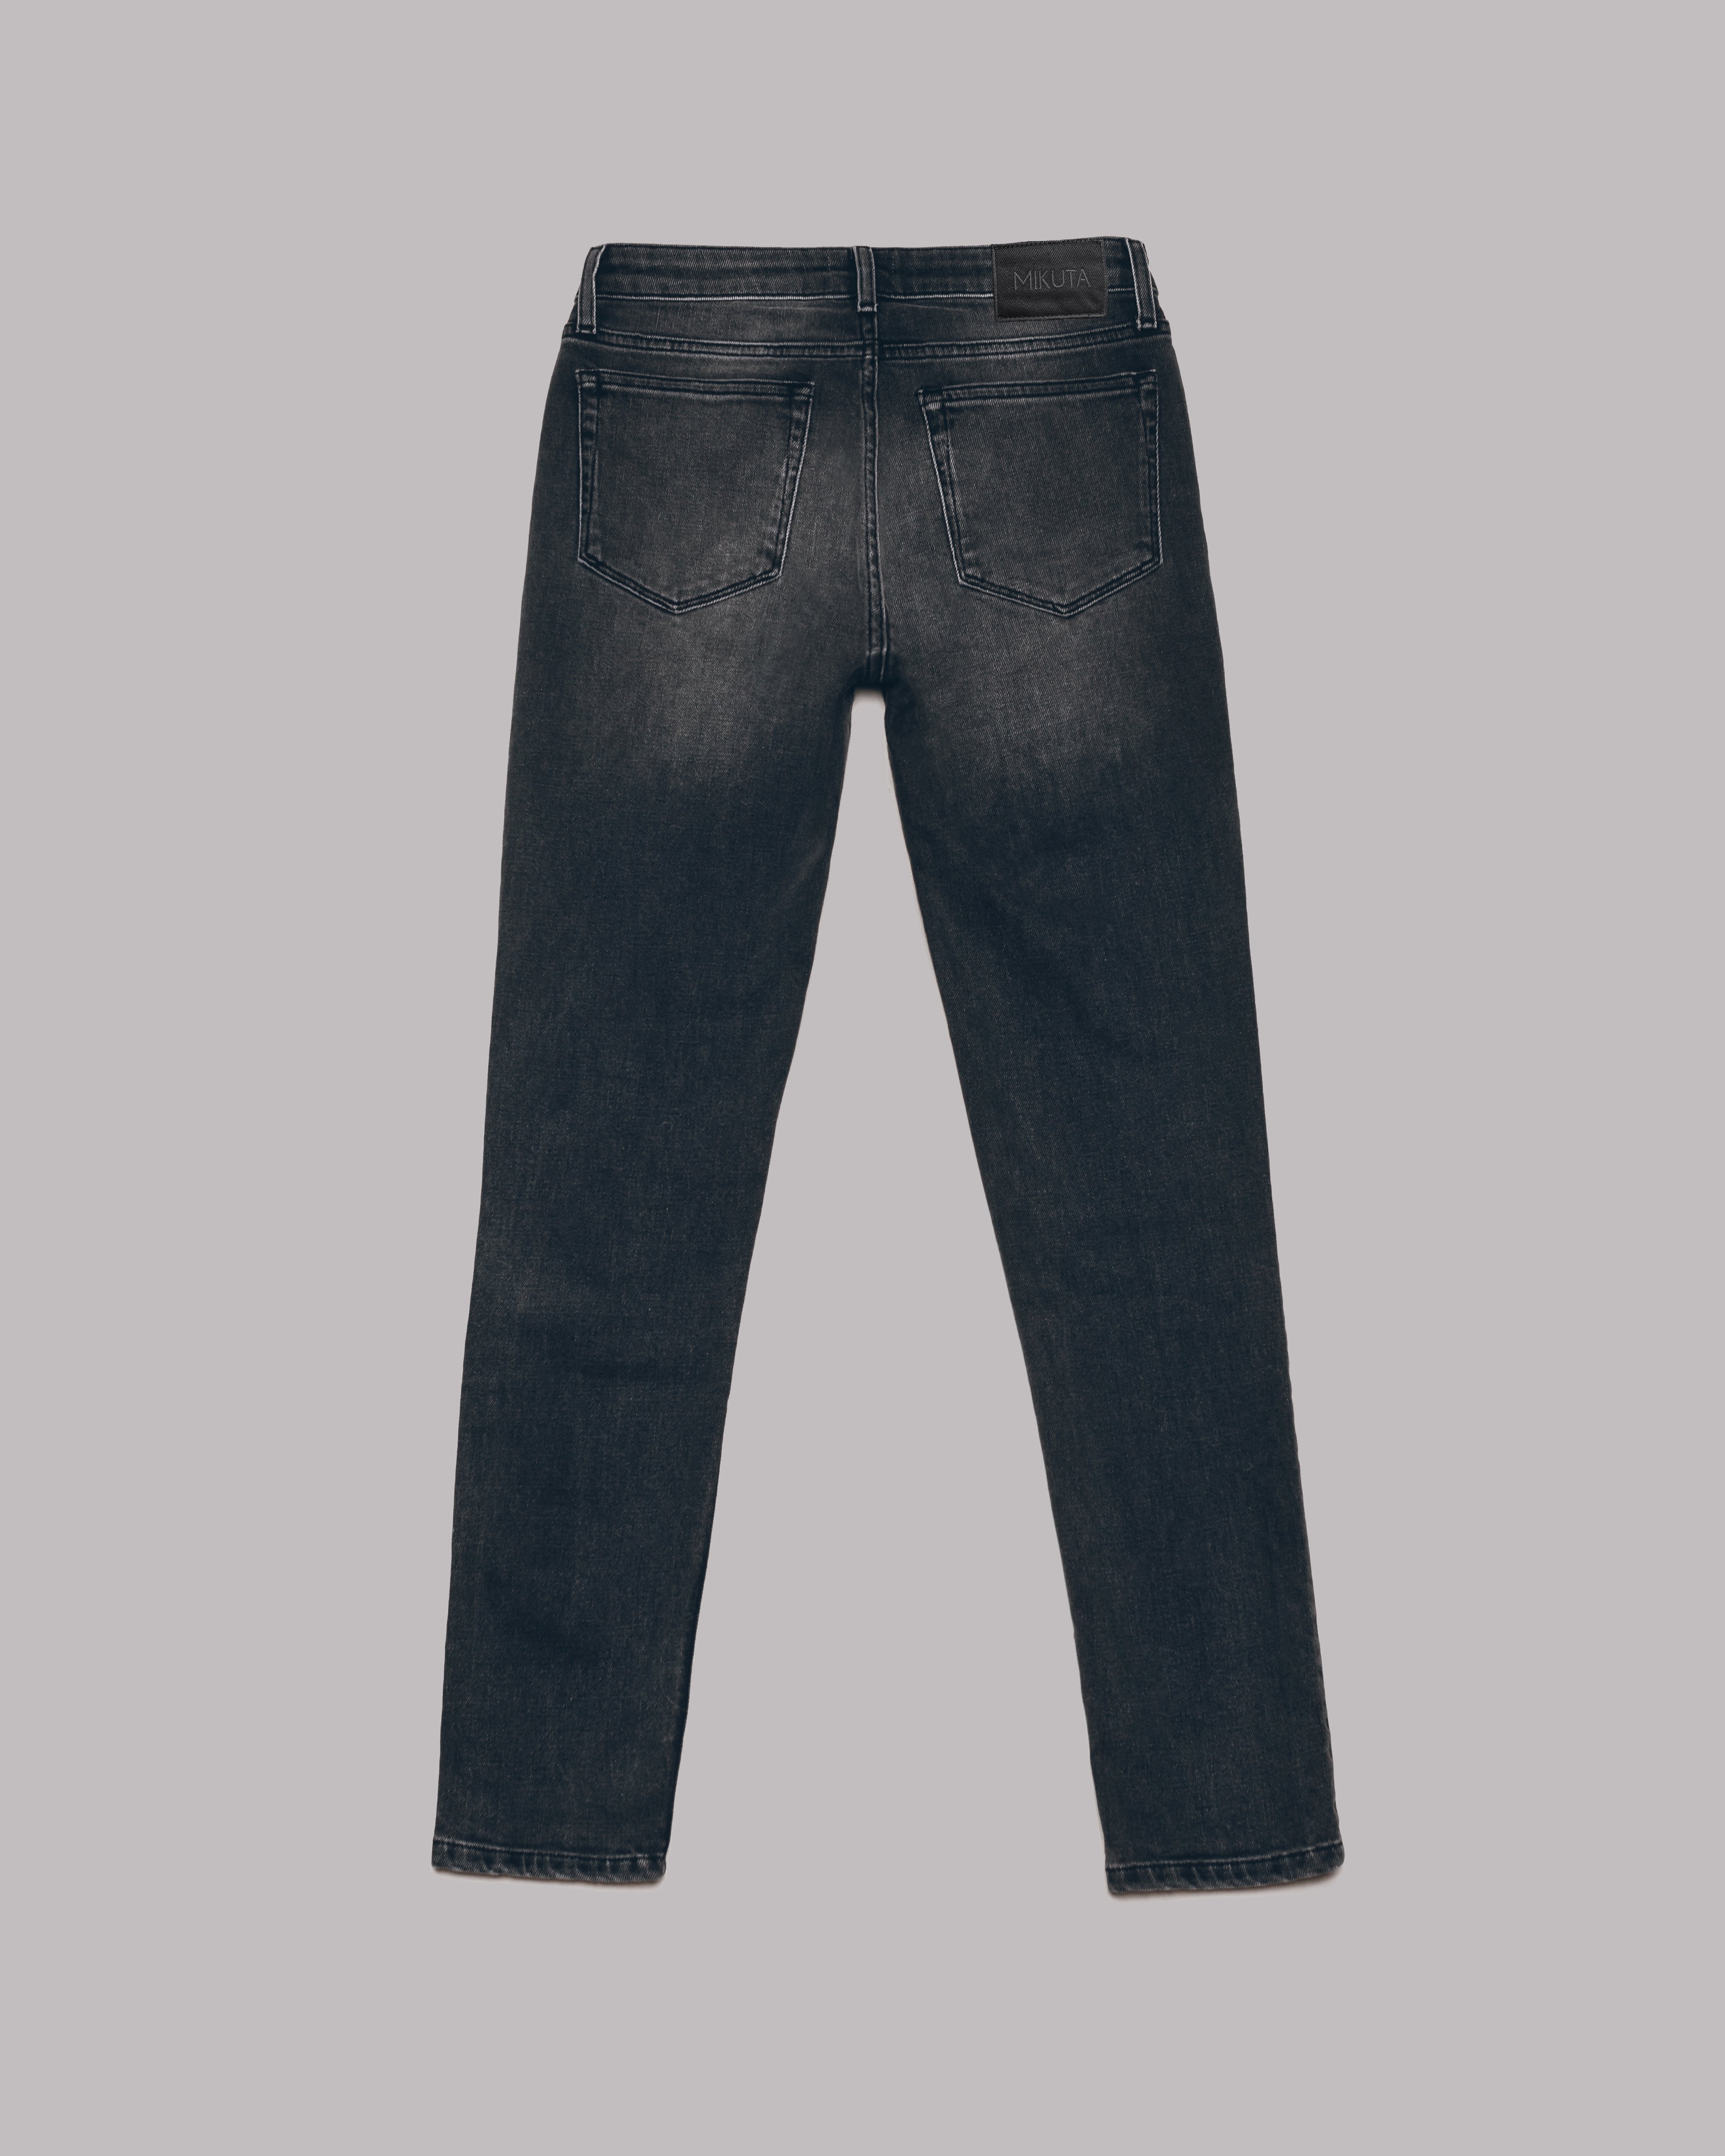 MIKUTA The Grey Skinny Jeans